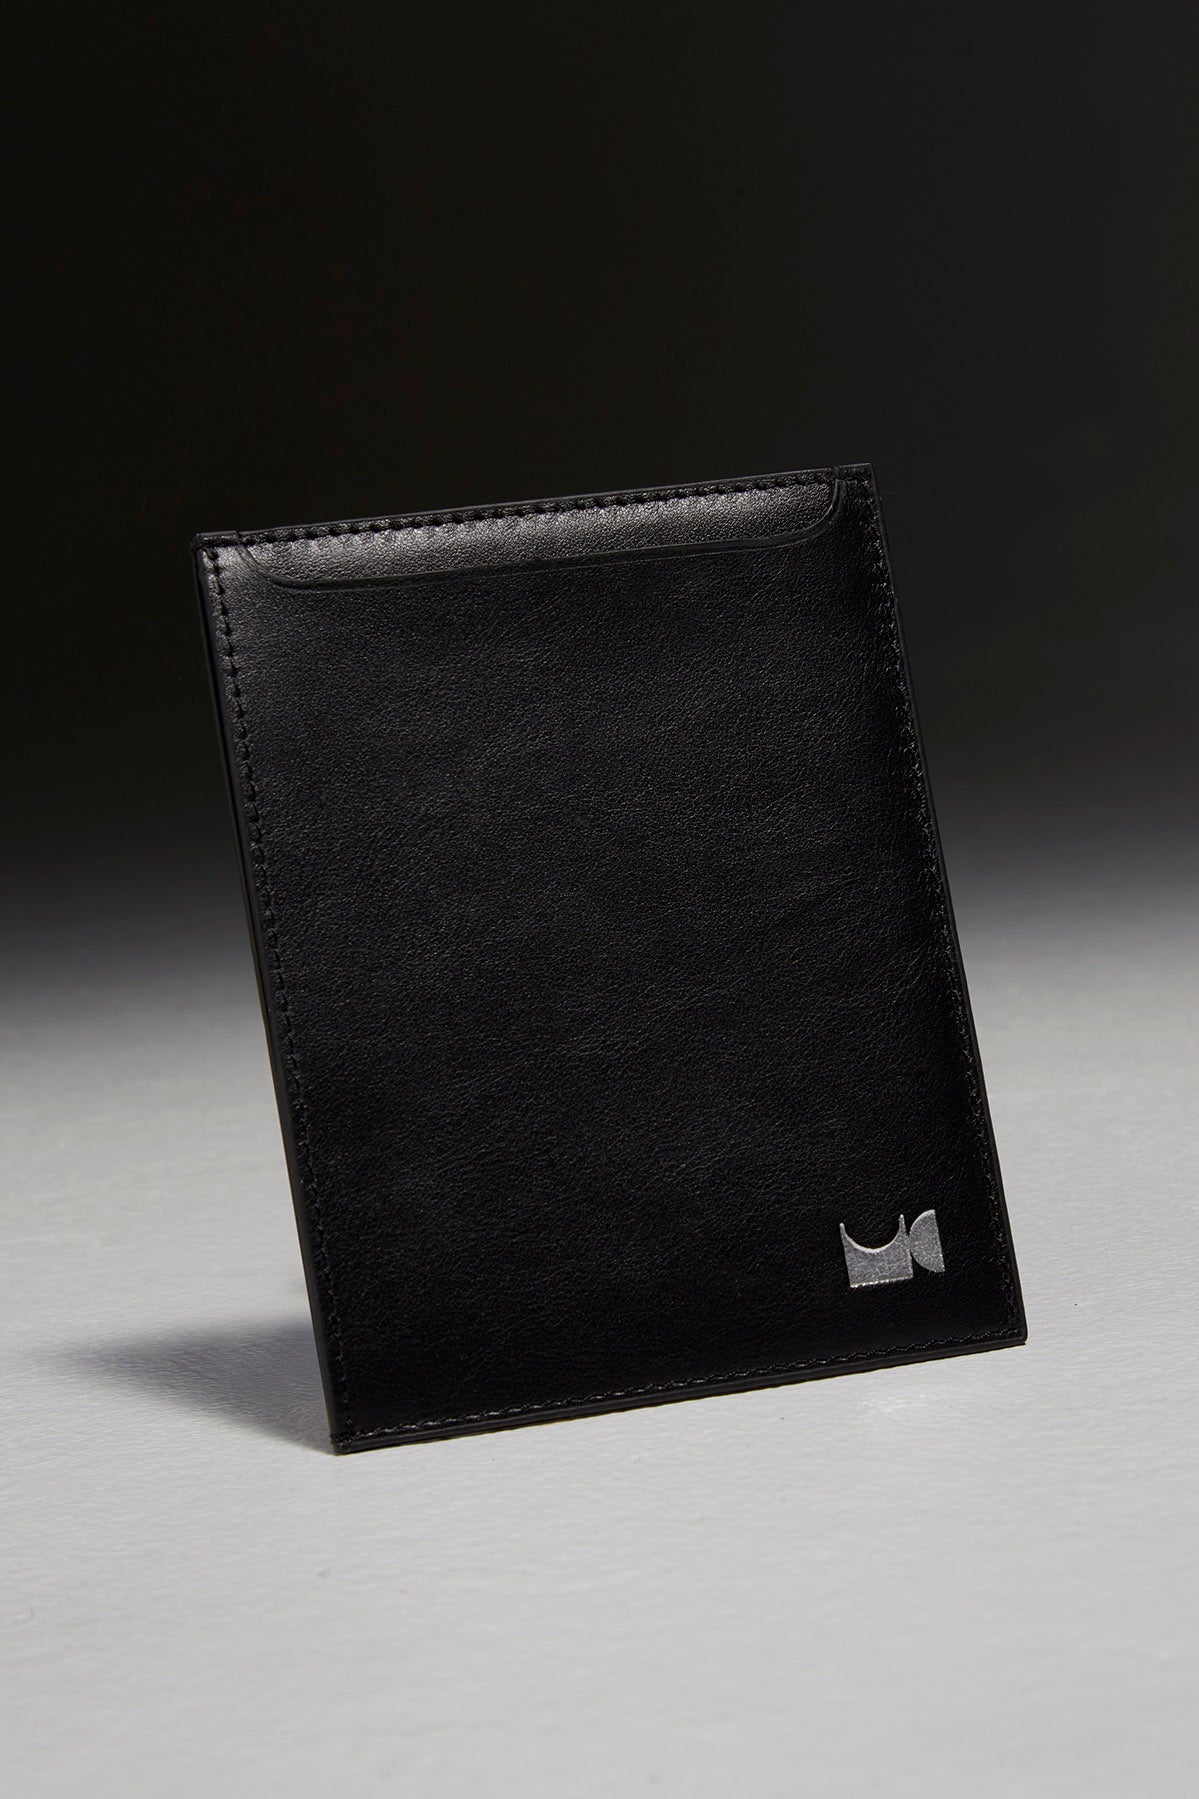 Black leather passport holder sitting in front of black backdrop